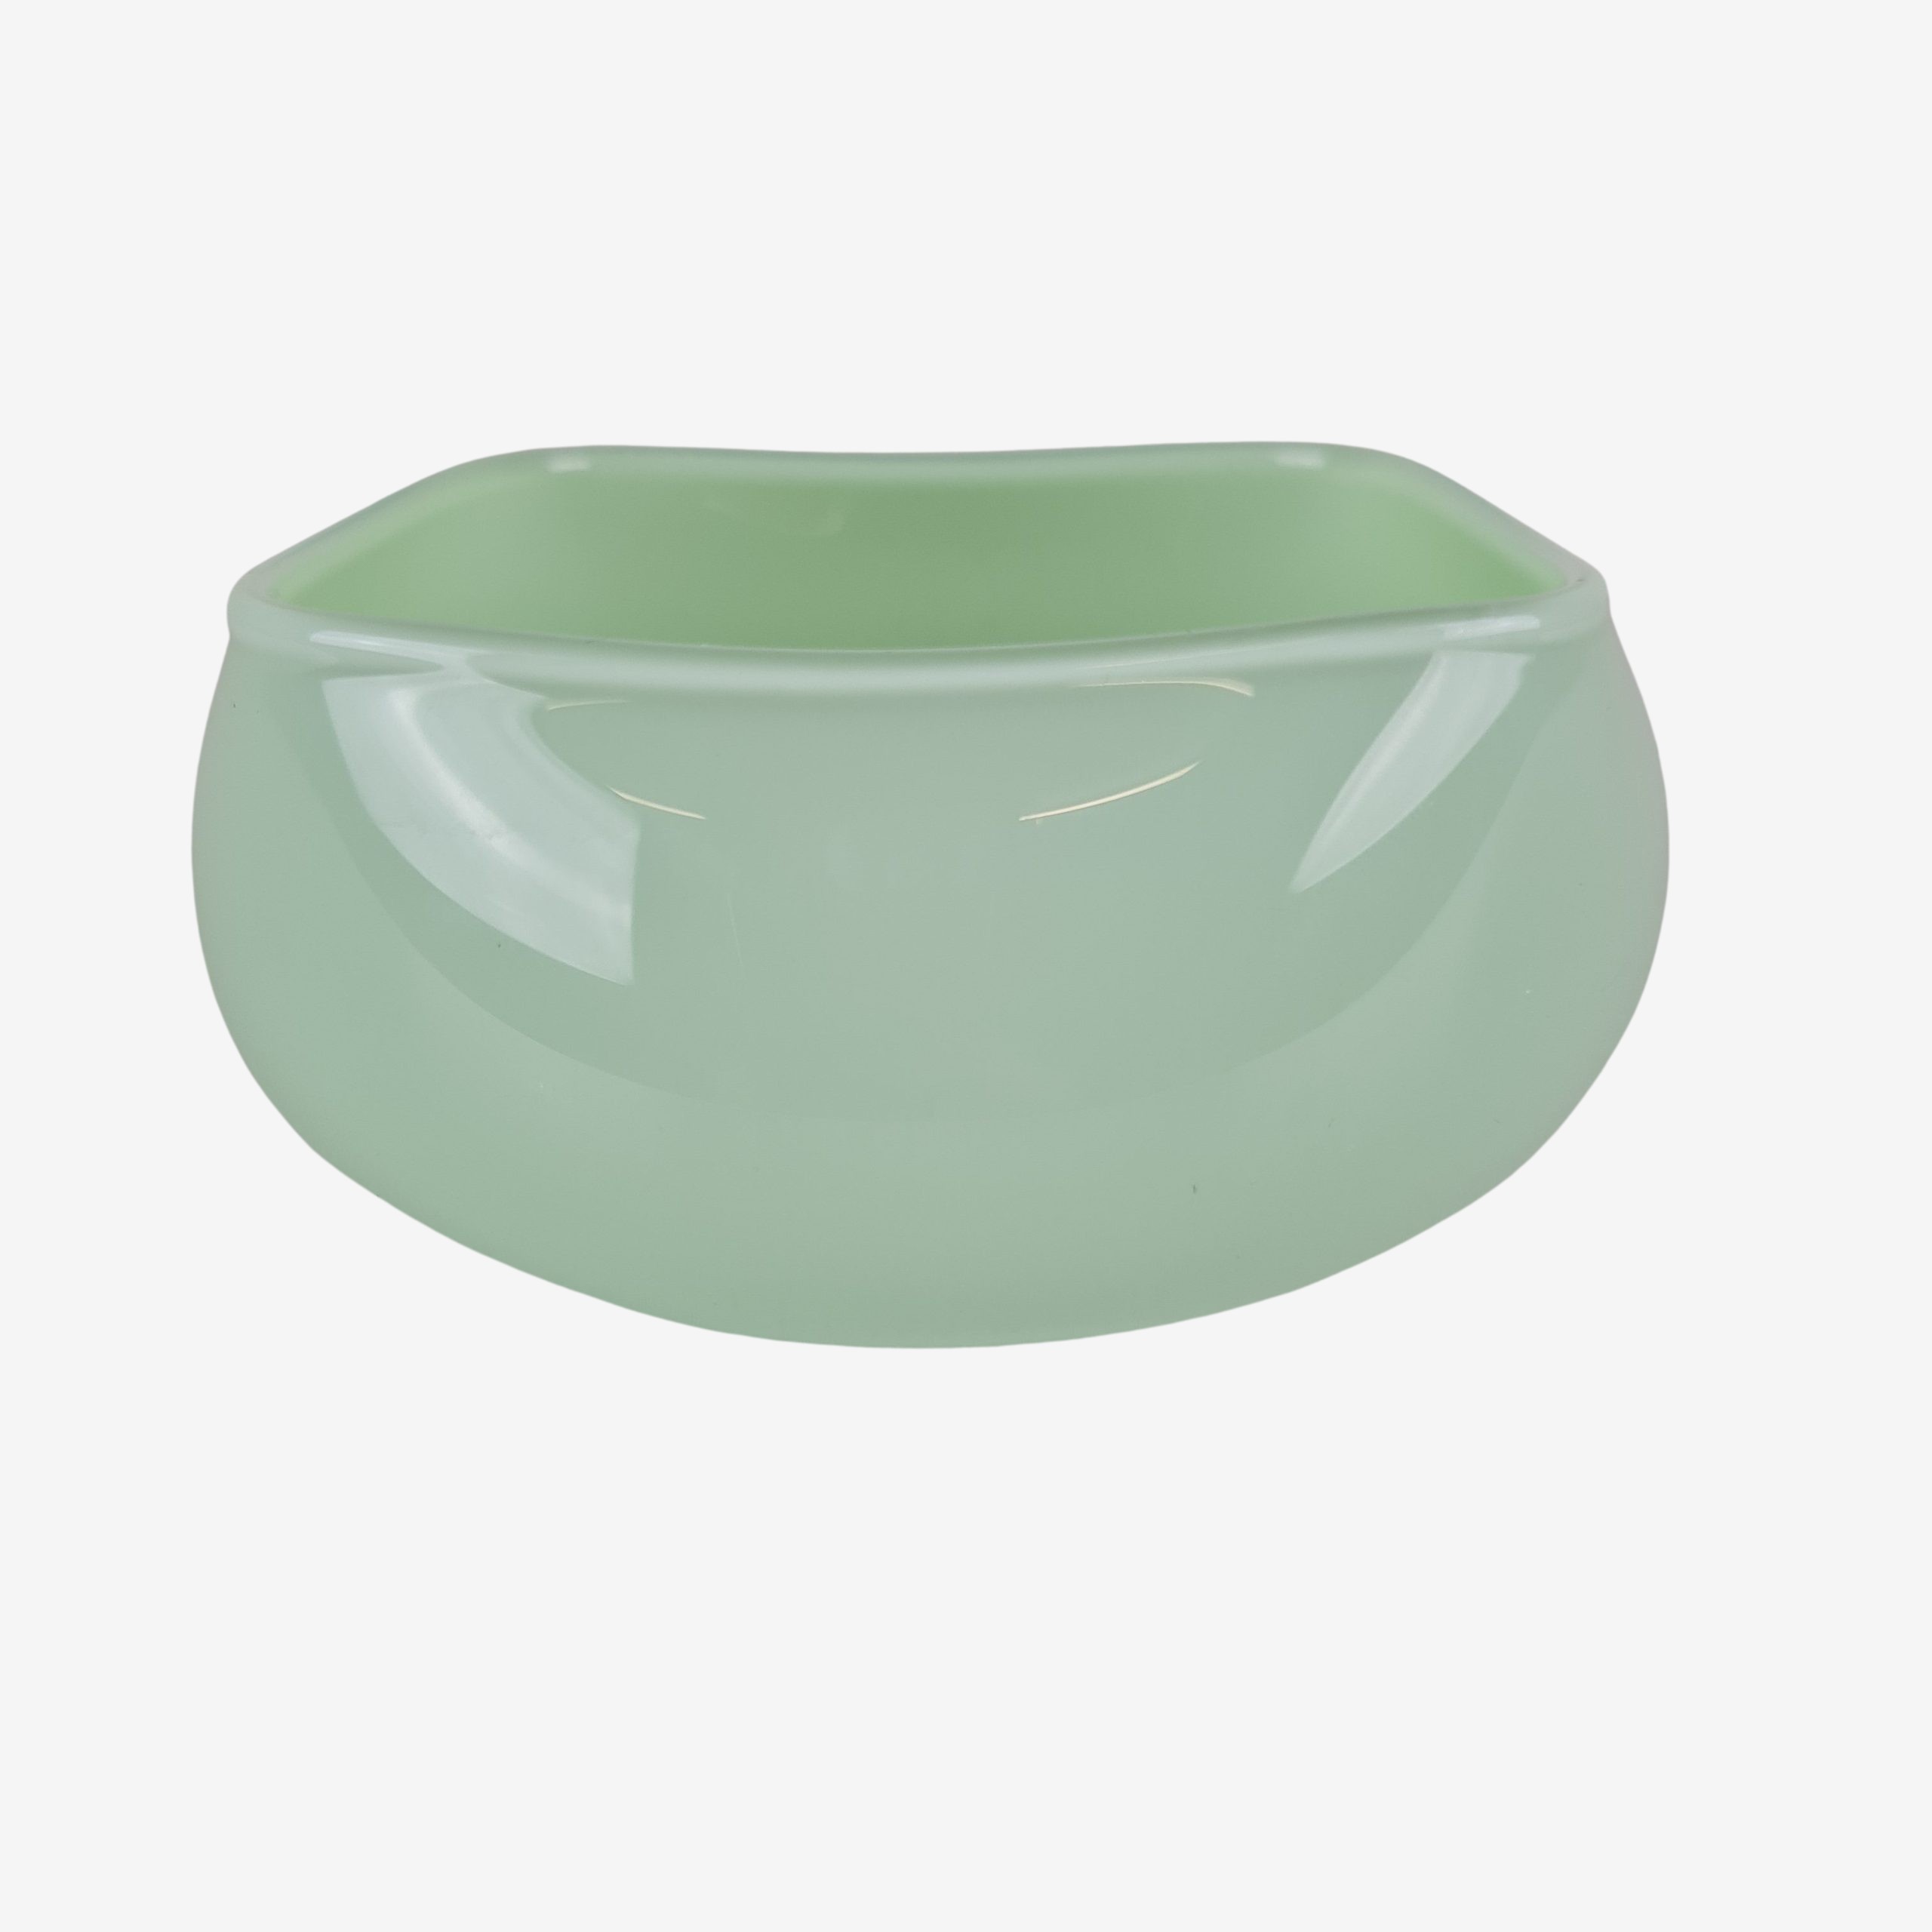 Sugar bowl model “Quadro” | Glass | Peter Svarrer | Holmegaard | Green